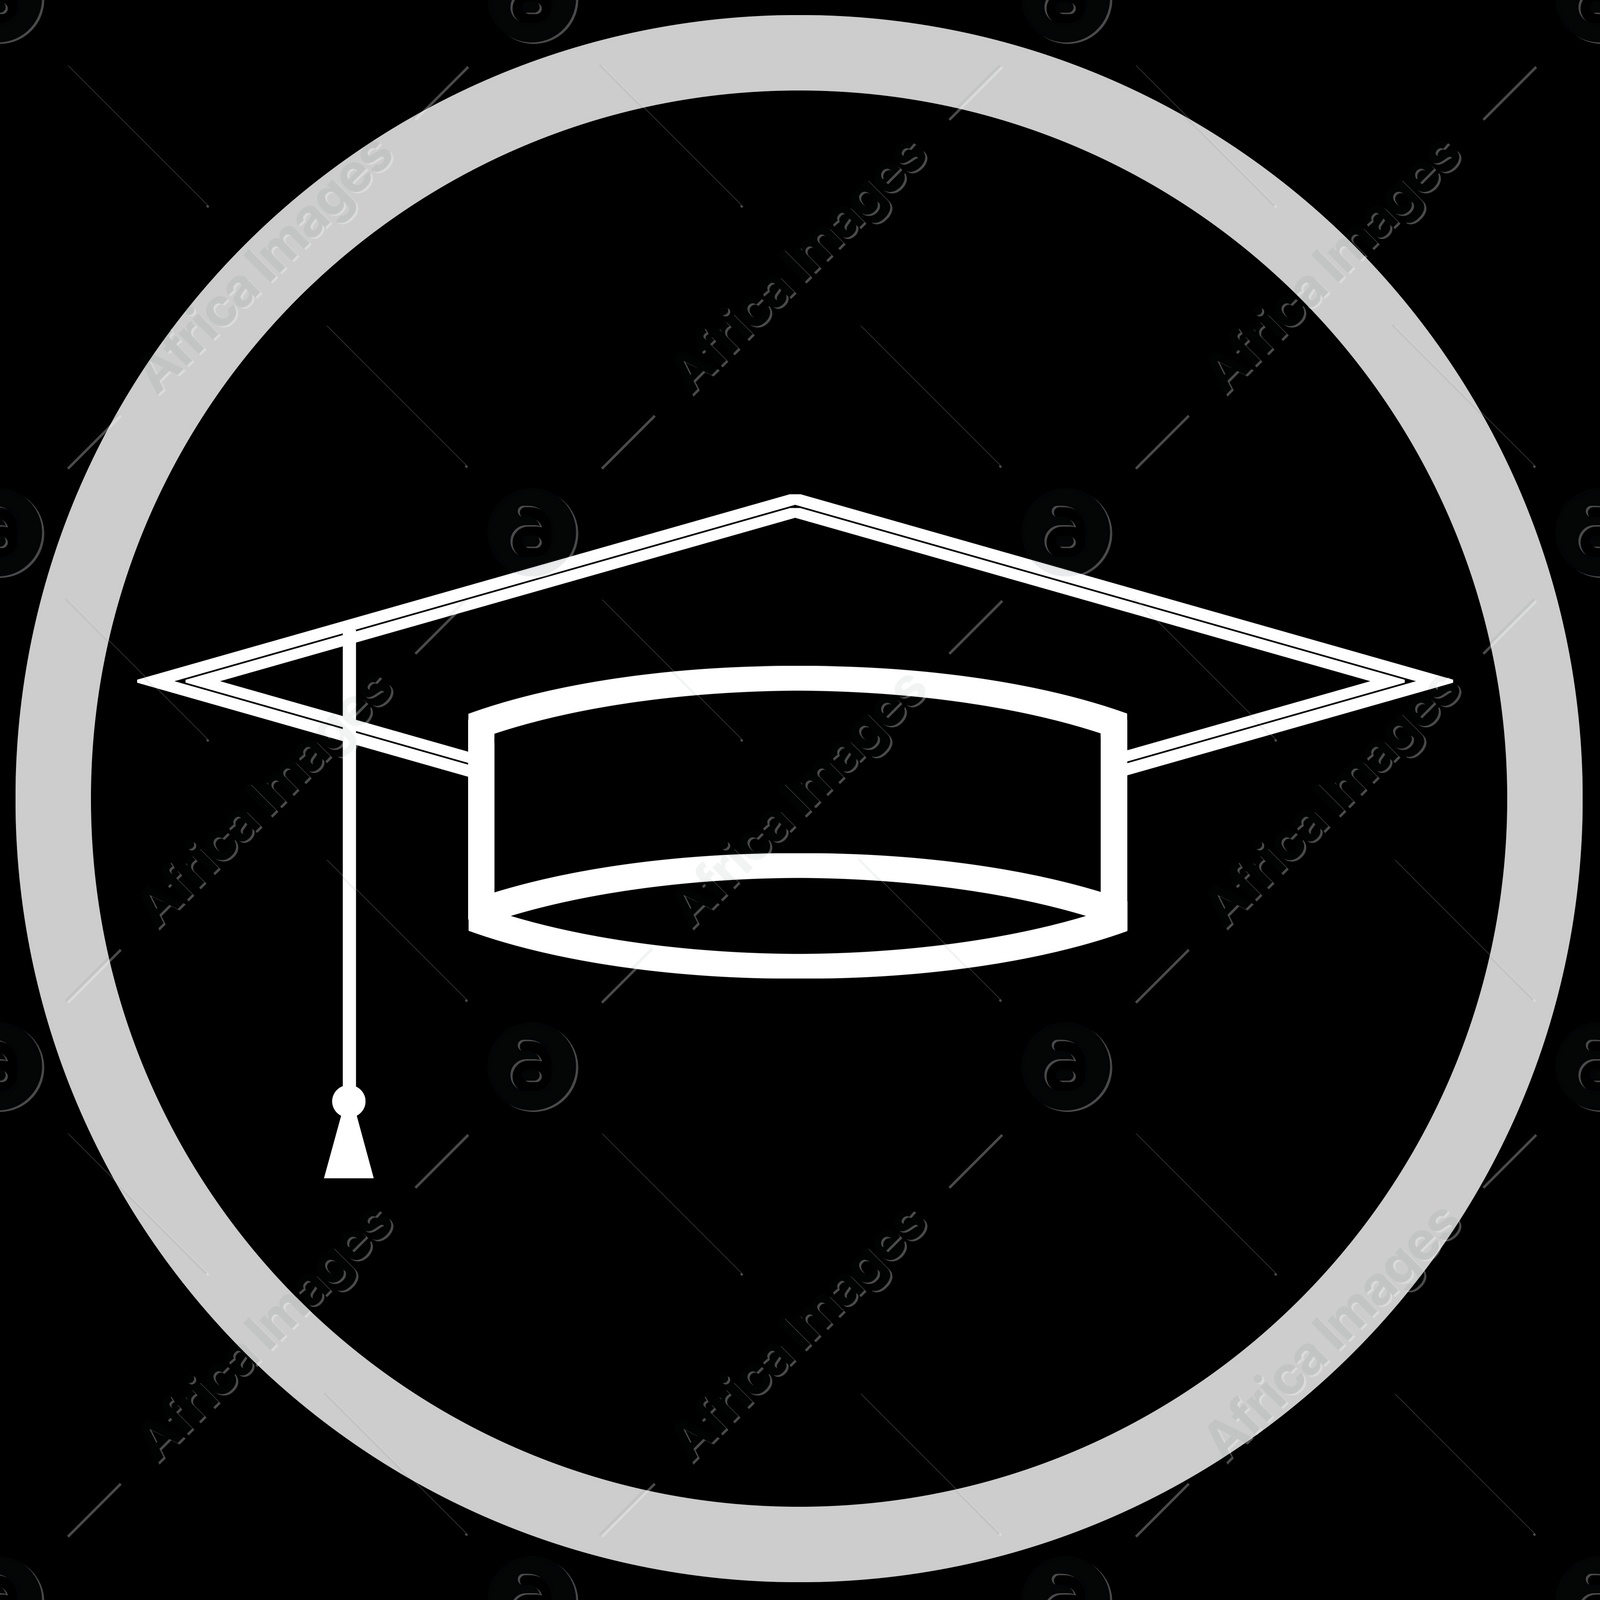 Image of Square academic cap in frame, illustration on black background